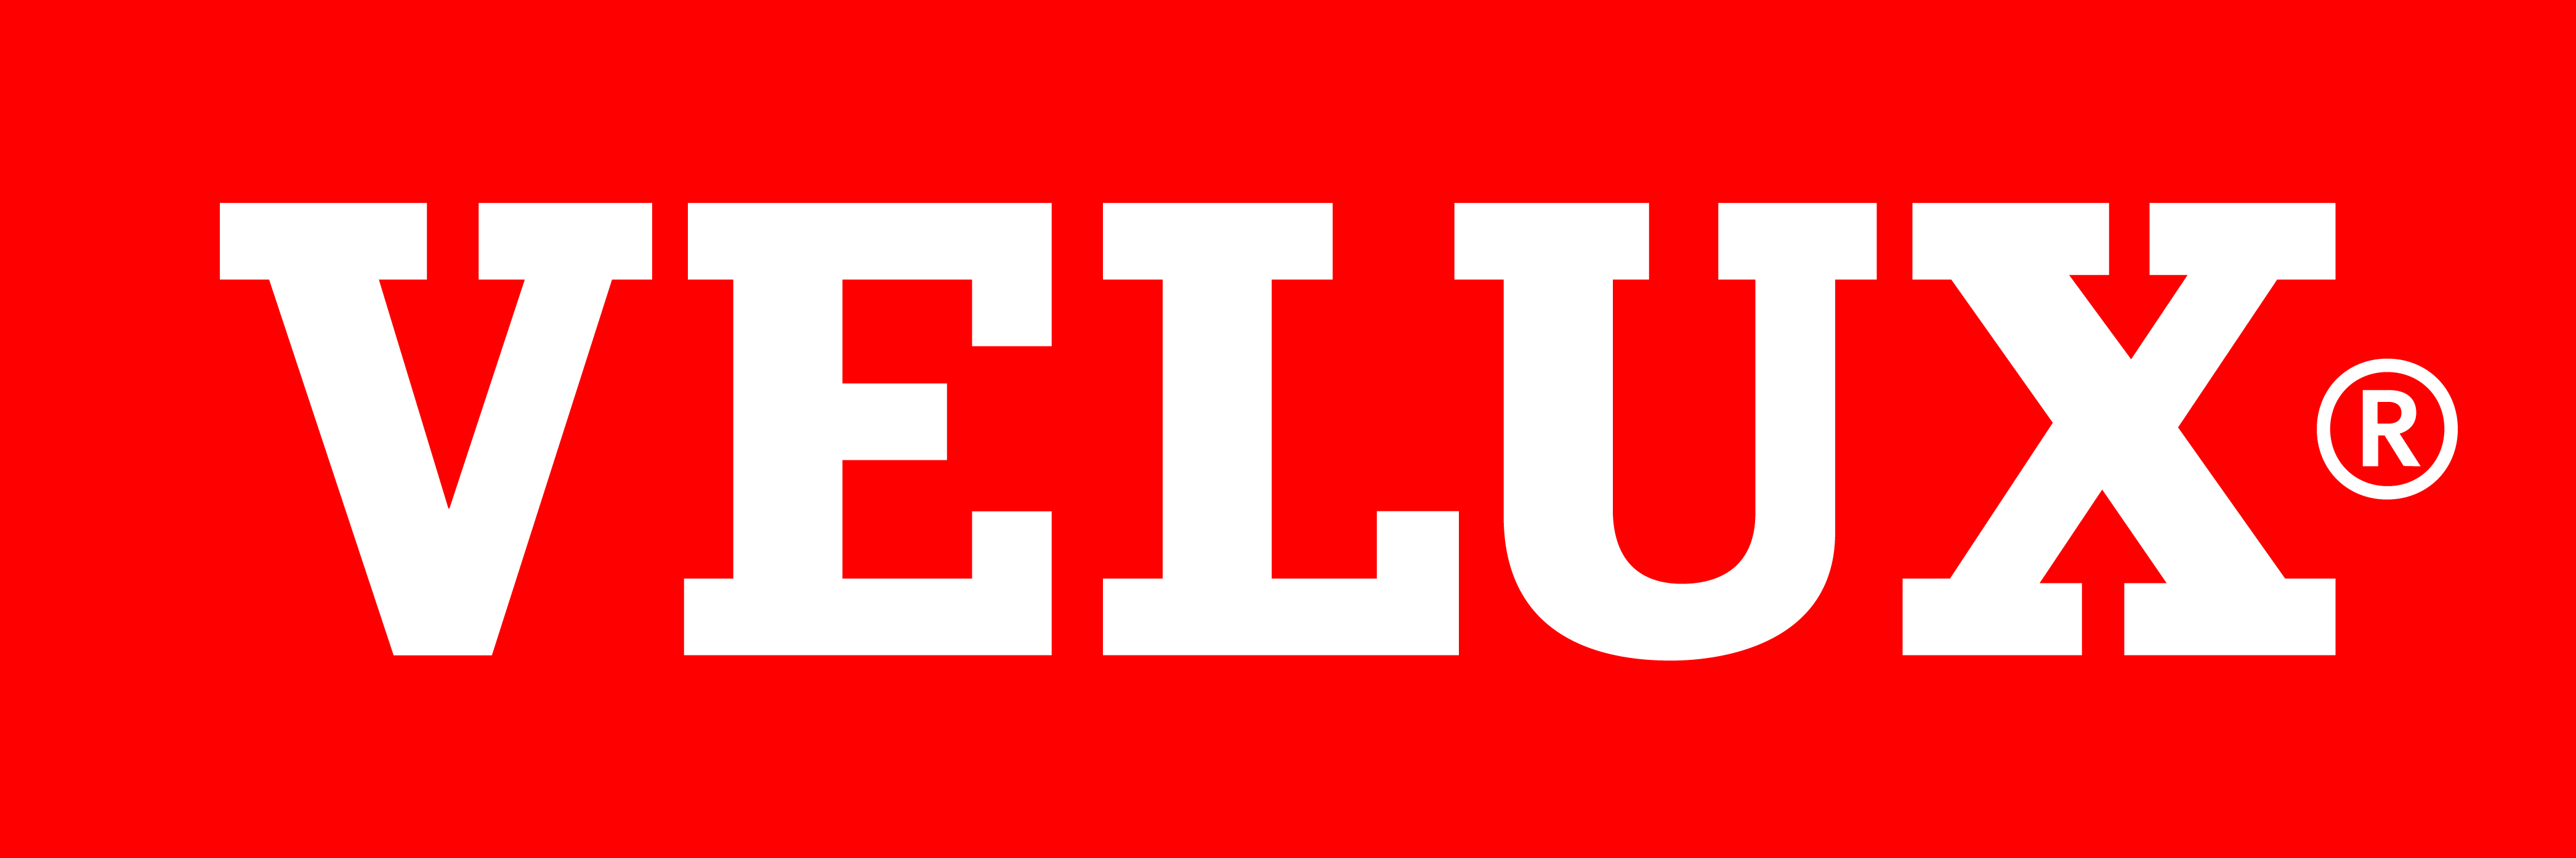 Velox Logo photo - 1